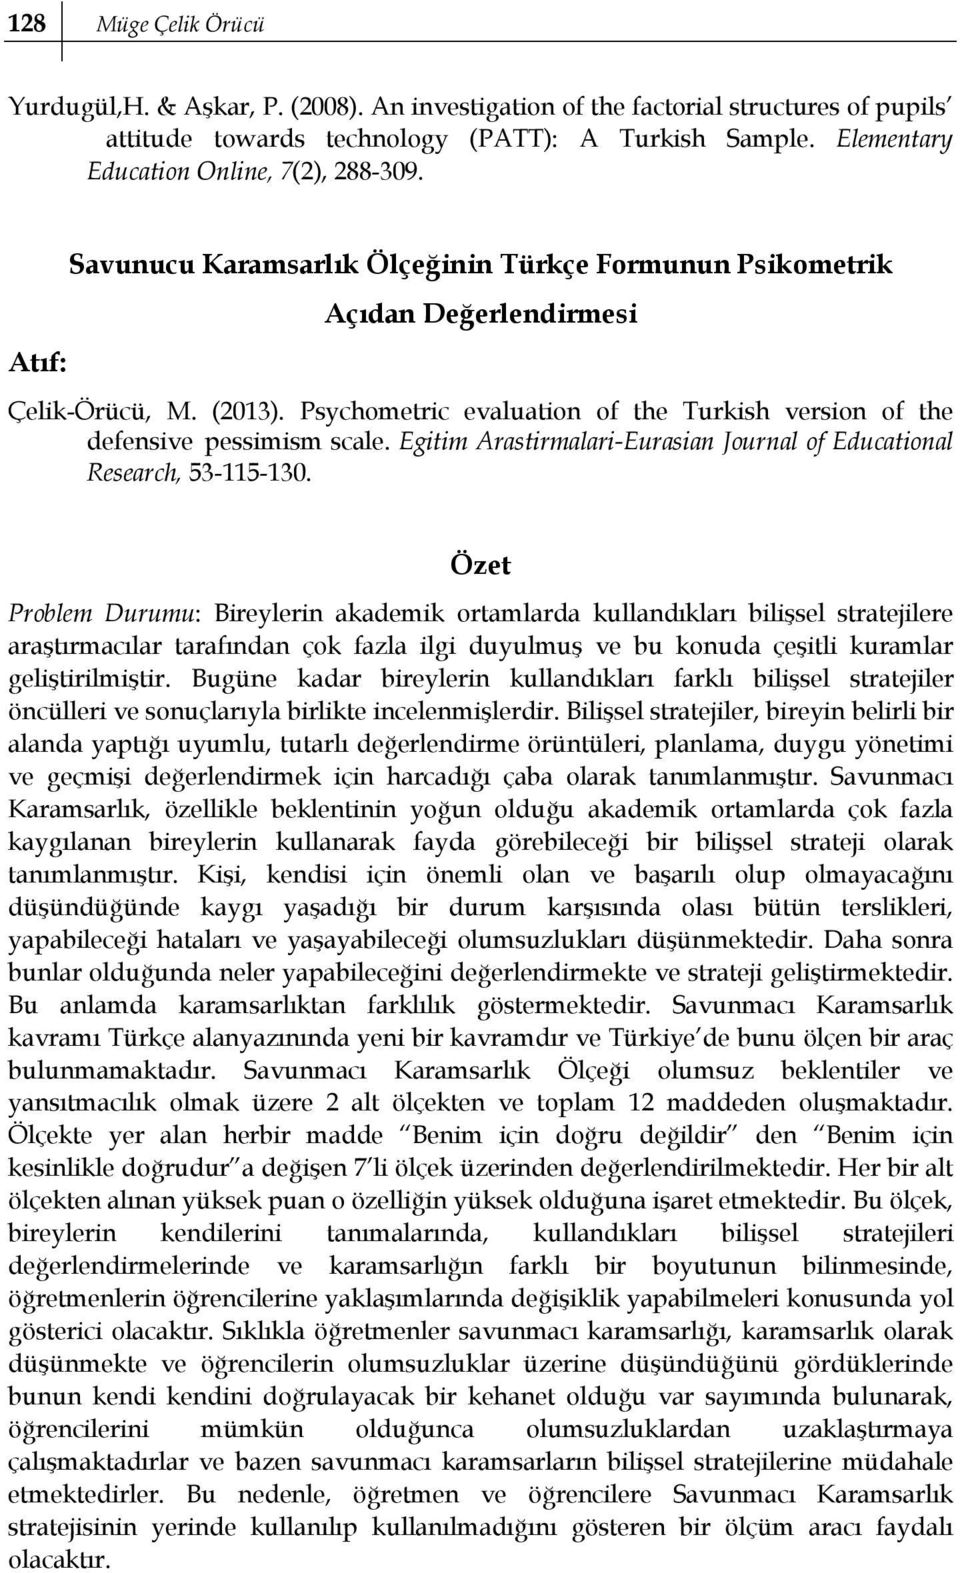 Psychometric evaluation of the Turkish version of the defensive pessimism scale. Egitim Arastirmalari-Eurasian Journal of Educational Research, 53-115-130.